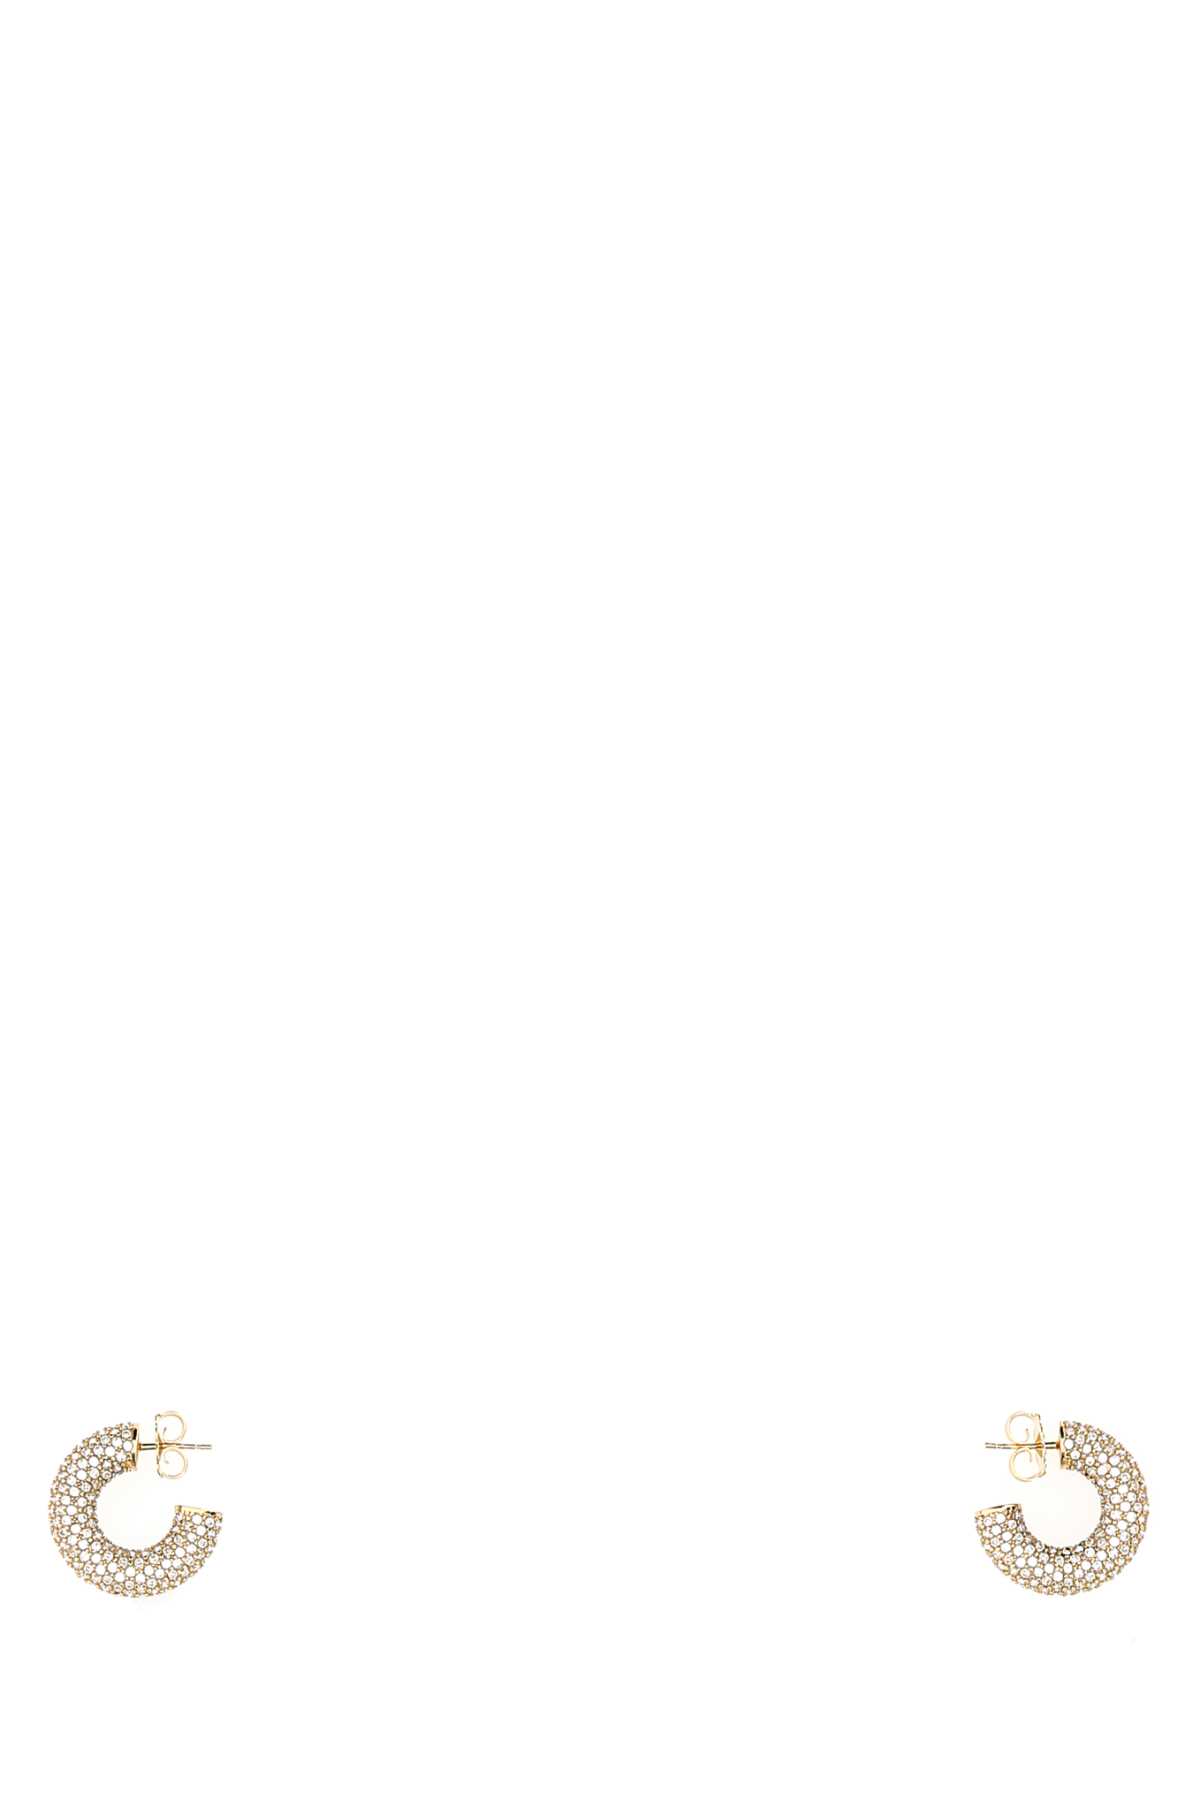 Amina Muaddi Embellished Metal Mini Cameron Earrings